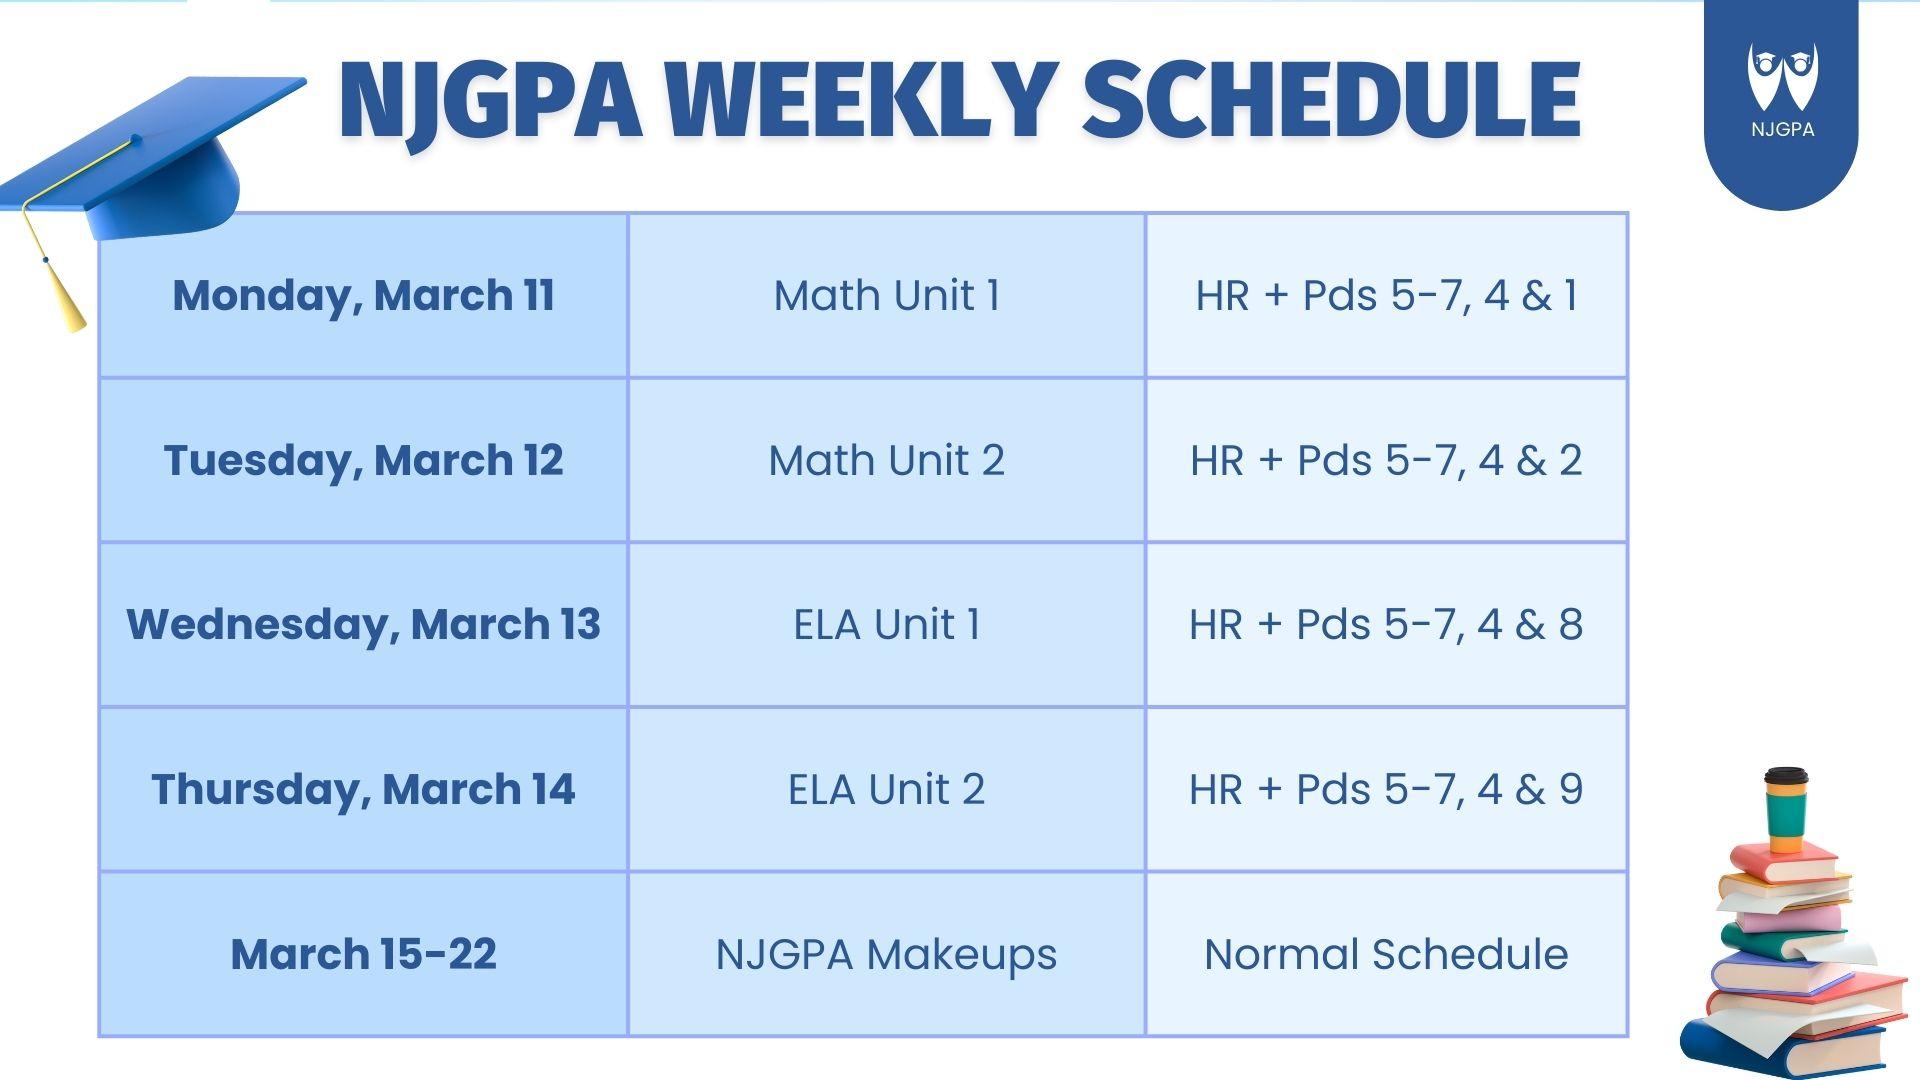 The NJGPA Weekly Schedule